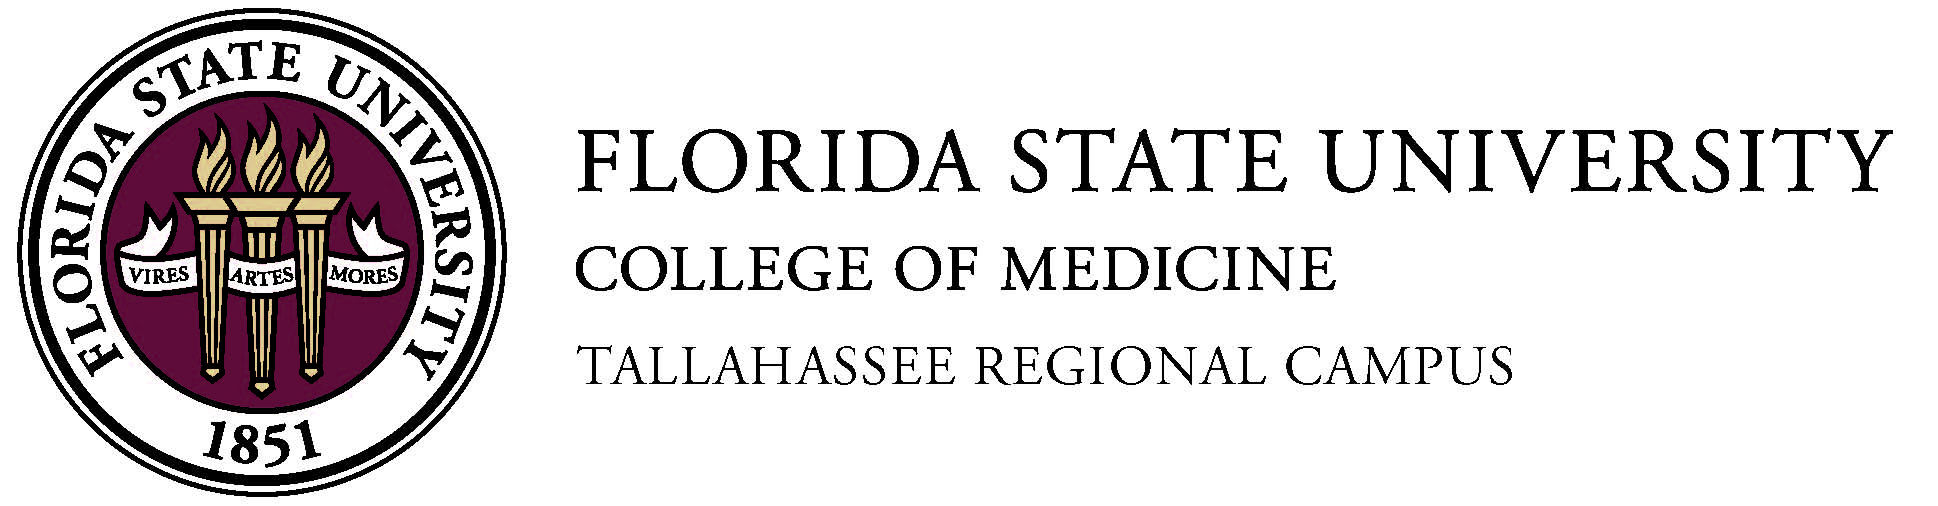 Фармацевтический колледж Университета Флориды лого